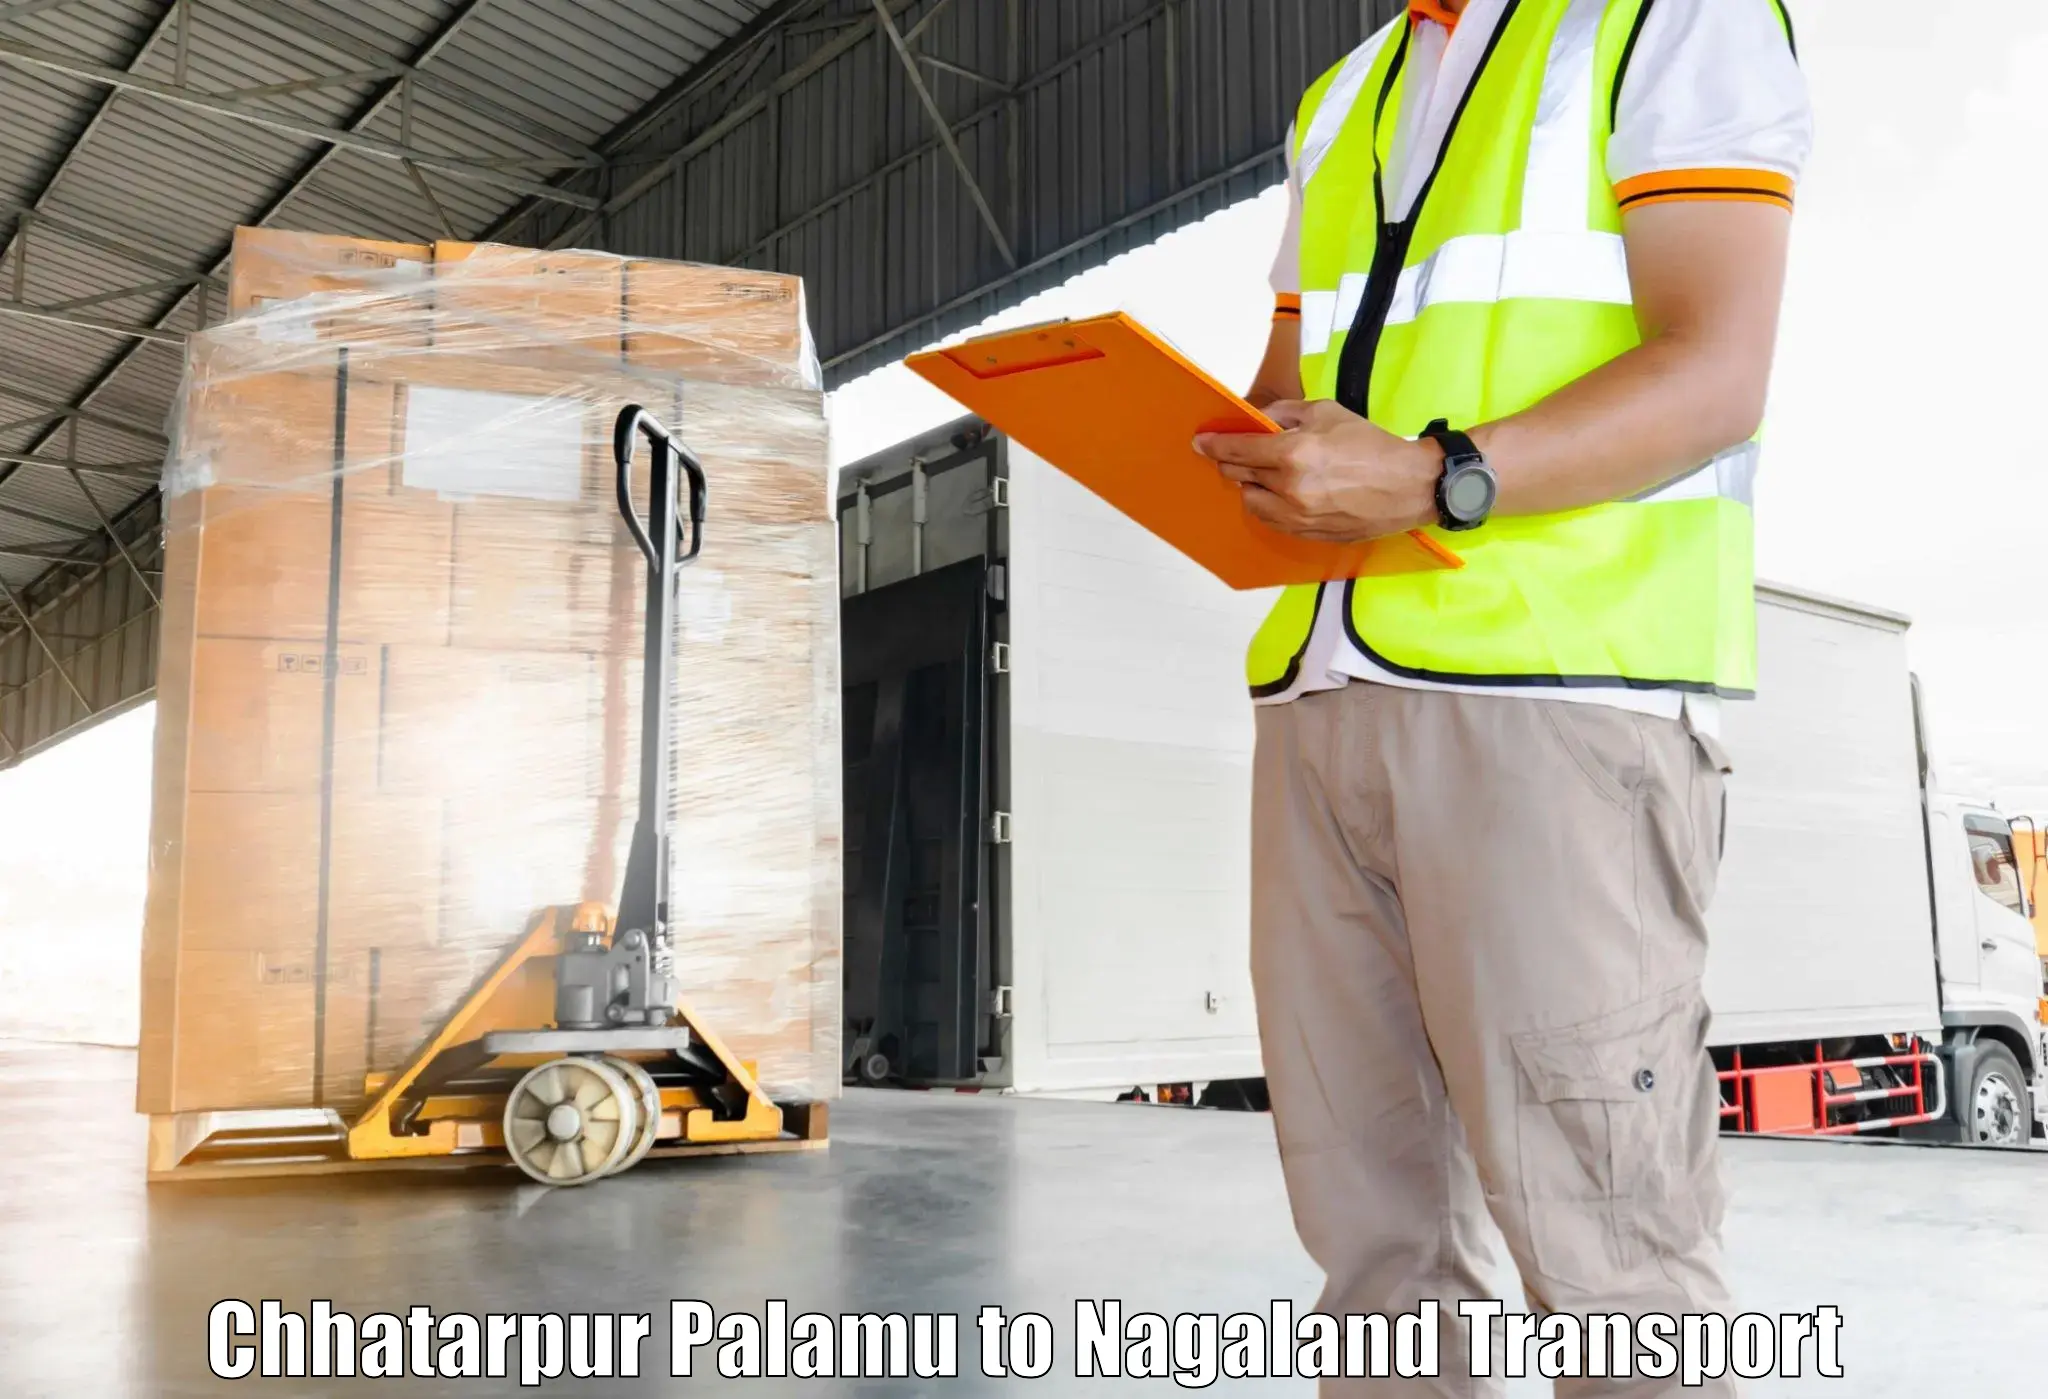 Furniture transport service Chhatarpur Palamu to Dimapur